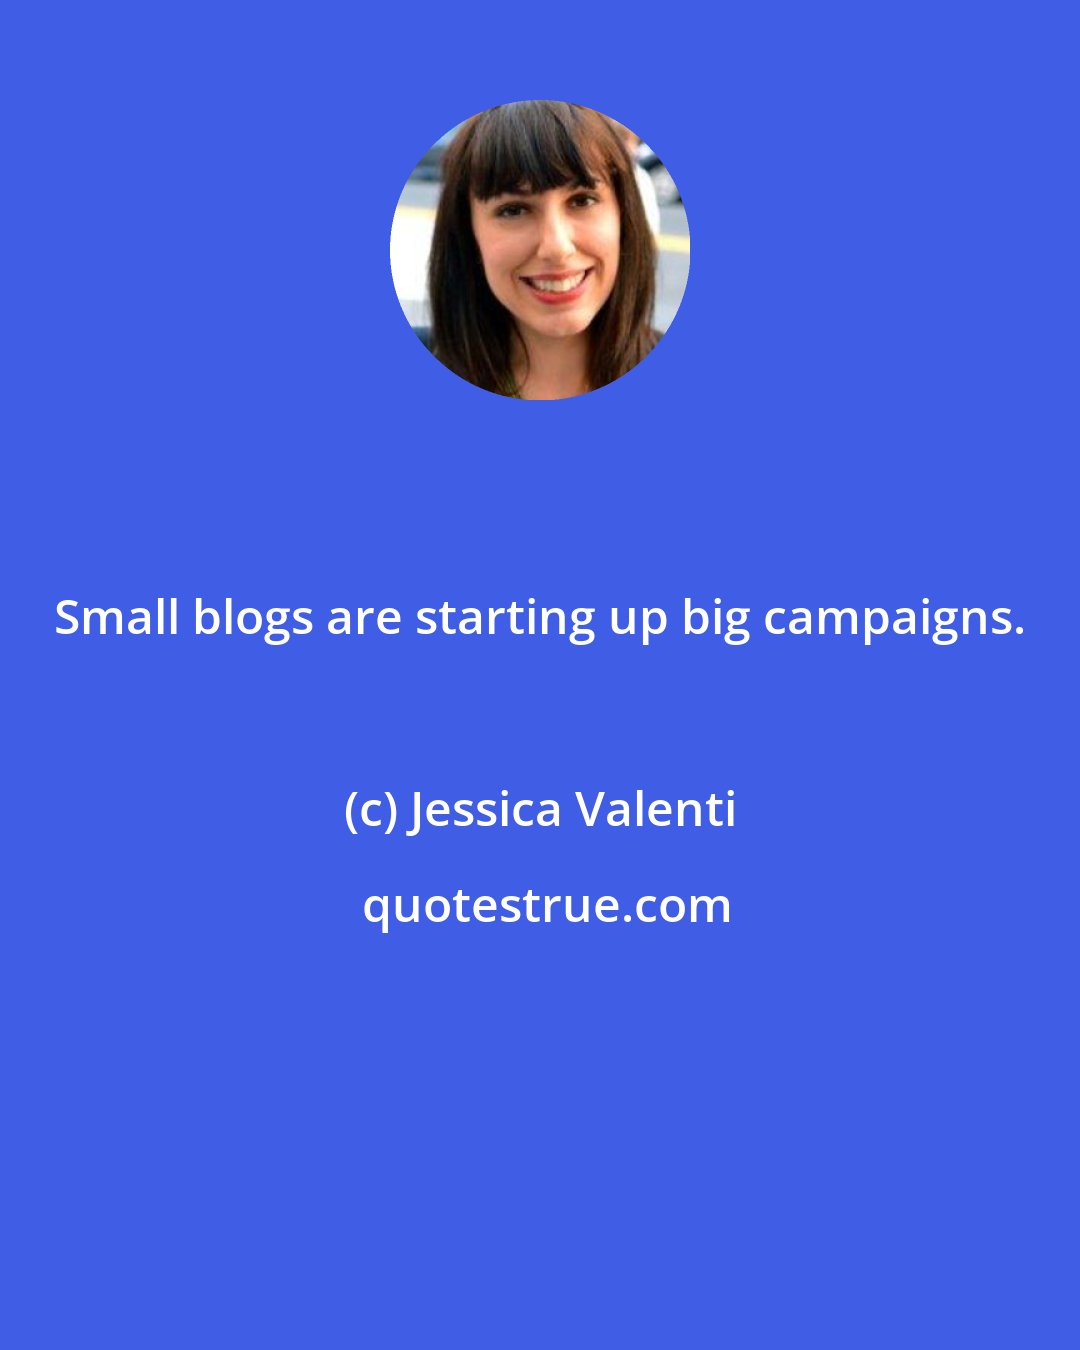 Jessica Valenti: Small blogs are starting up big campaigns.